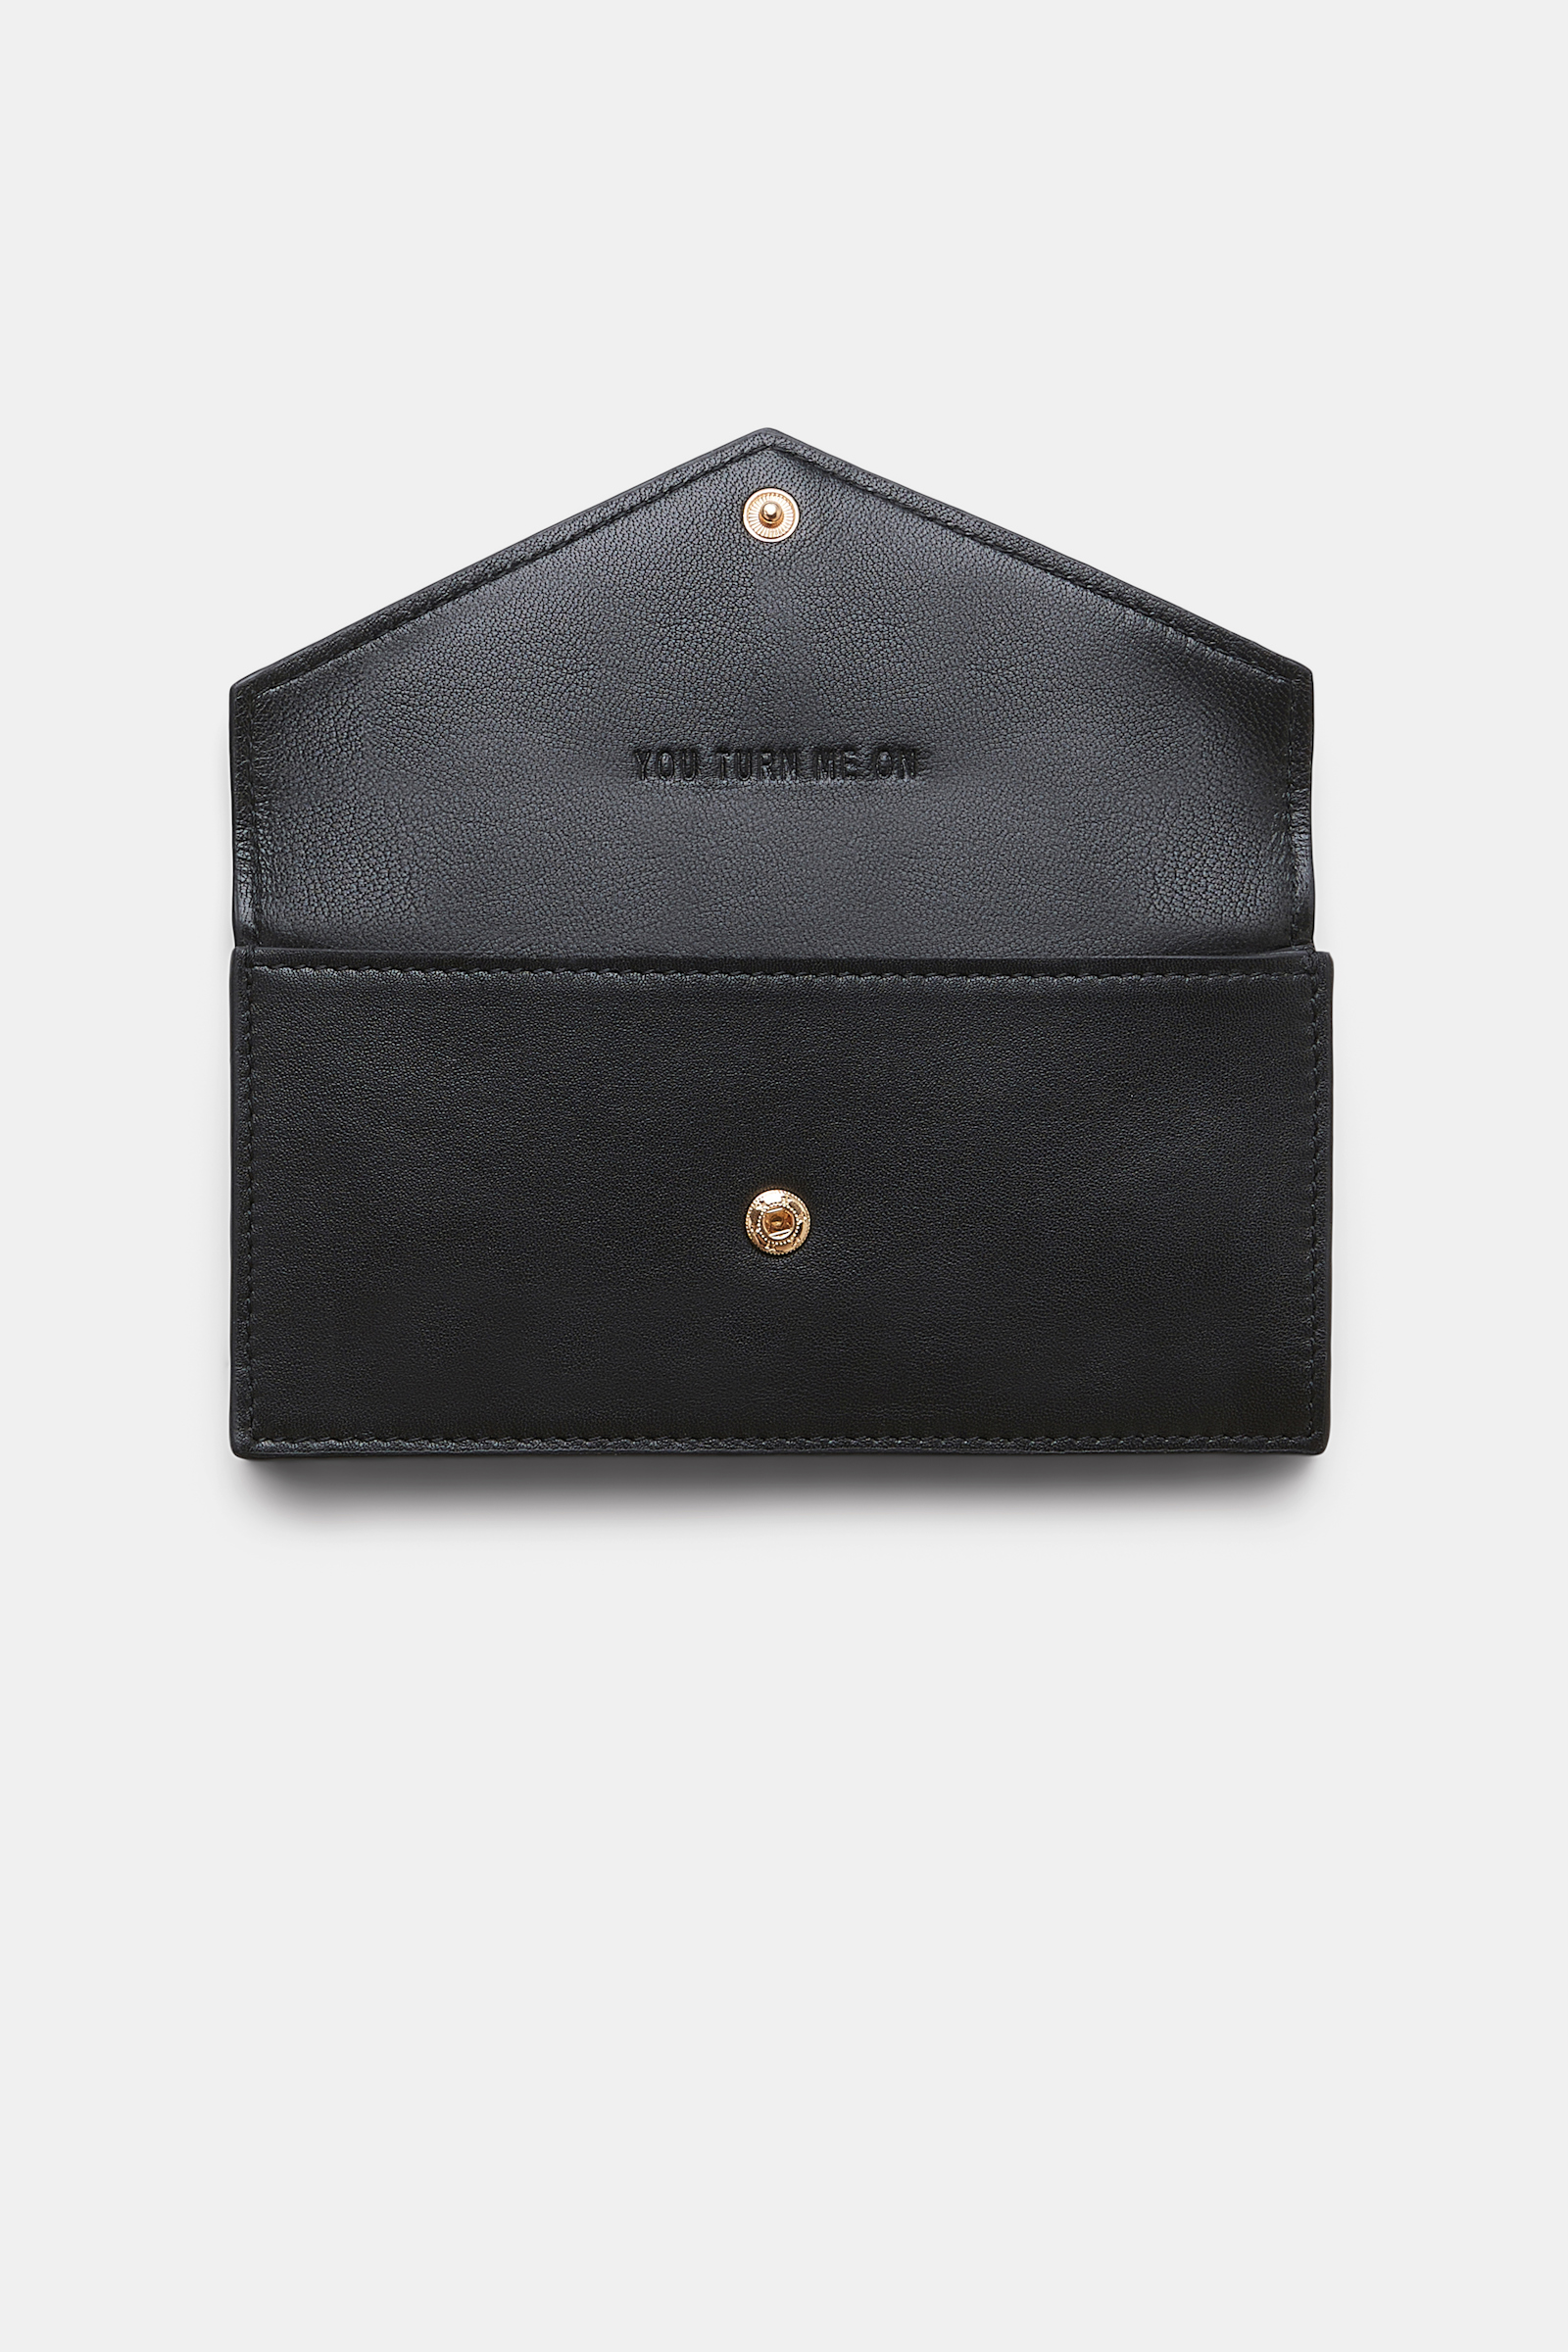 Dorothee Schumacher Envelope wallet pure black